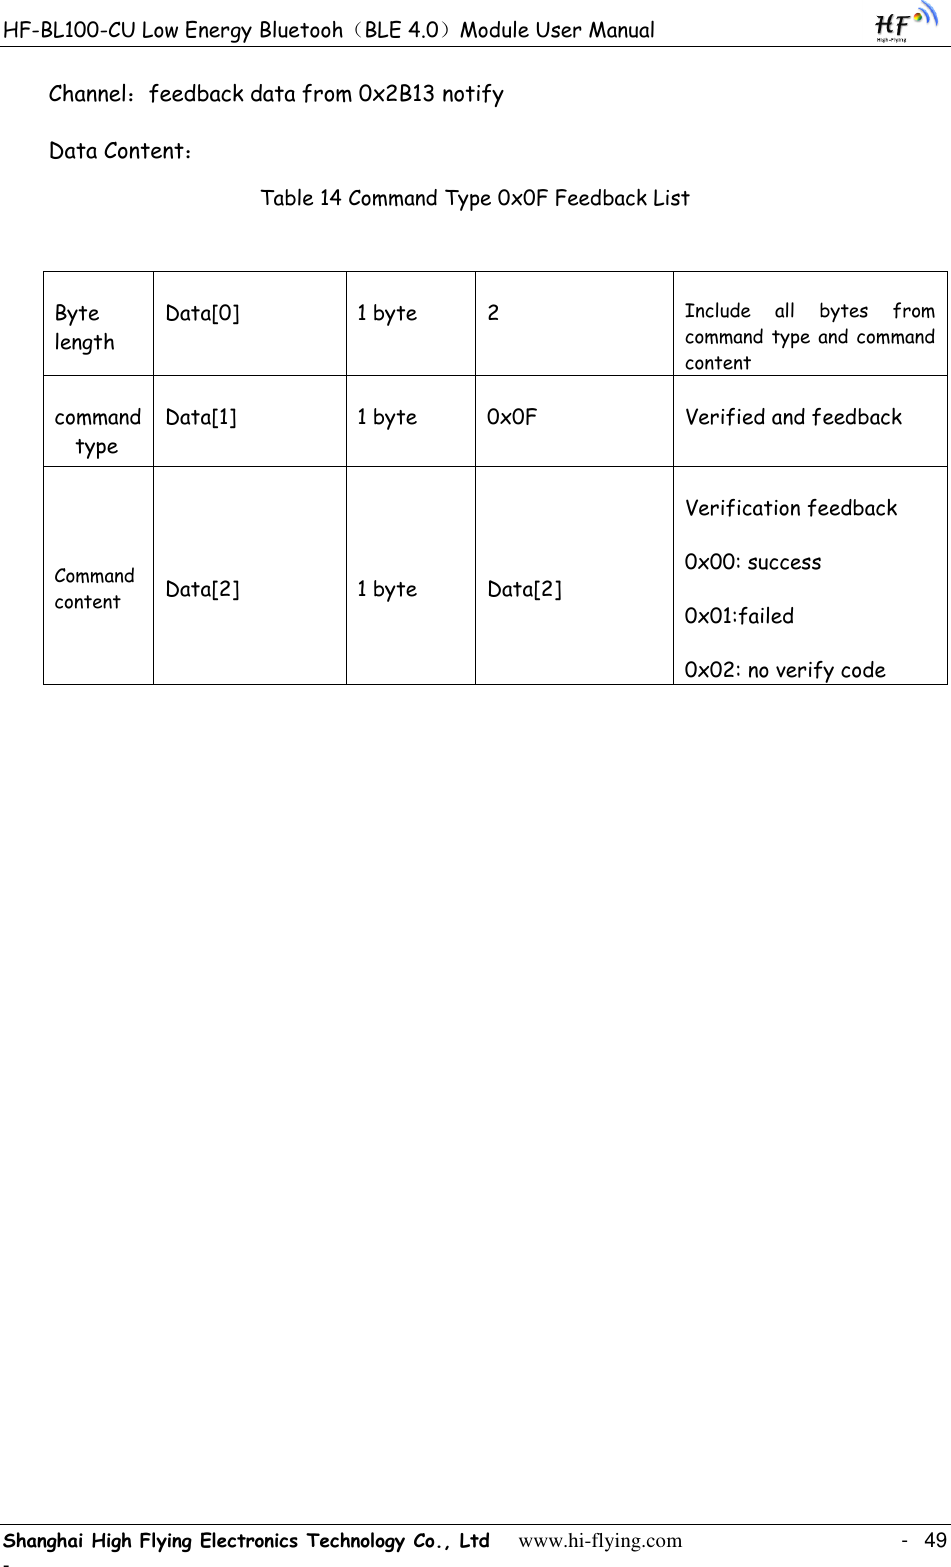 HF-BL100-CU Low Energy Bluetooh（BLE 4.0）Module User Manual Shanghai High Flying Electronics Technology Co., Ltd     www.hi-flying.com    -  49 - Channel：feedback data from 0x2B13 notify  Data Content： Table 14 Command Type 0x0F Feedback List  Byte length Data[0] 1 byte 2 Include  all  bytes  from command type and command content commandtype Data[1] 1 byte 0x0F Verified and feedback Command content Data[2] 1 byte Data[2] Verification feedback 0x00: success 0x01:failed 0x02: no verify code      